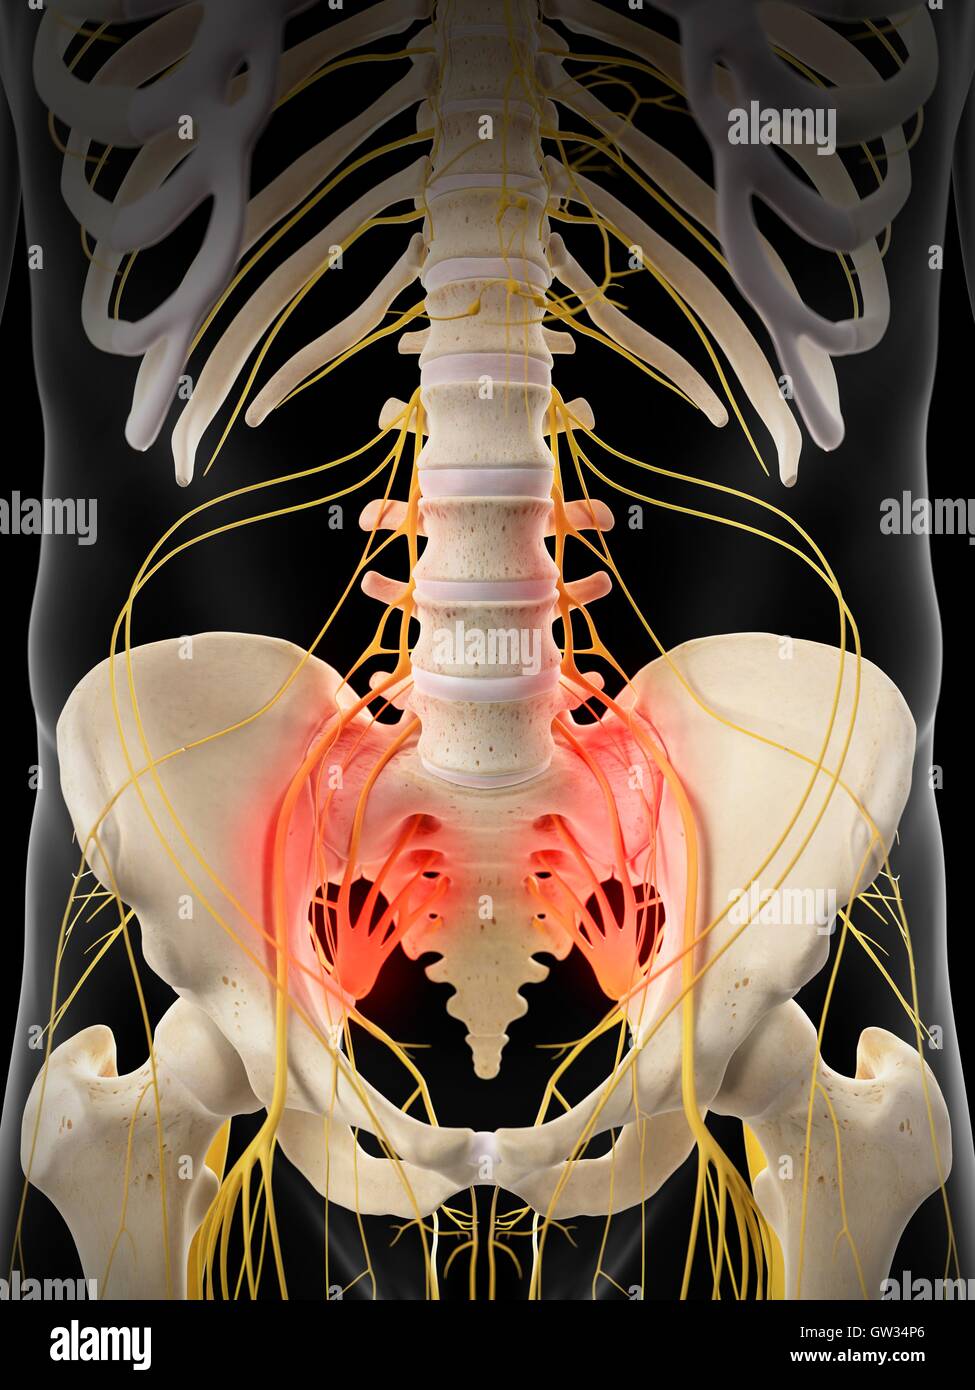 Human sacral nerve pain, illustration. Stock Photo